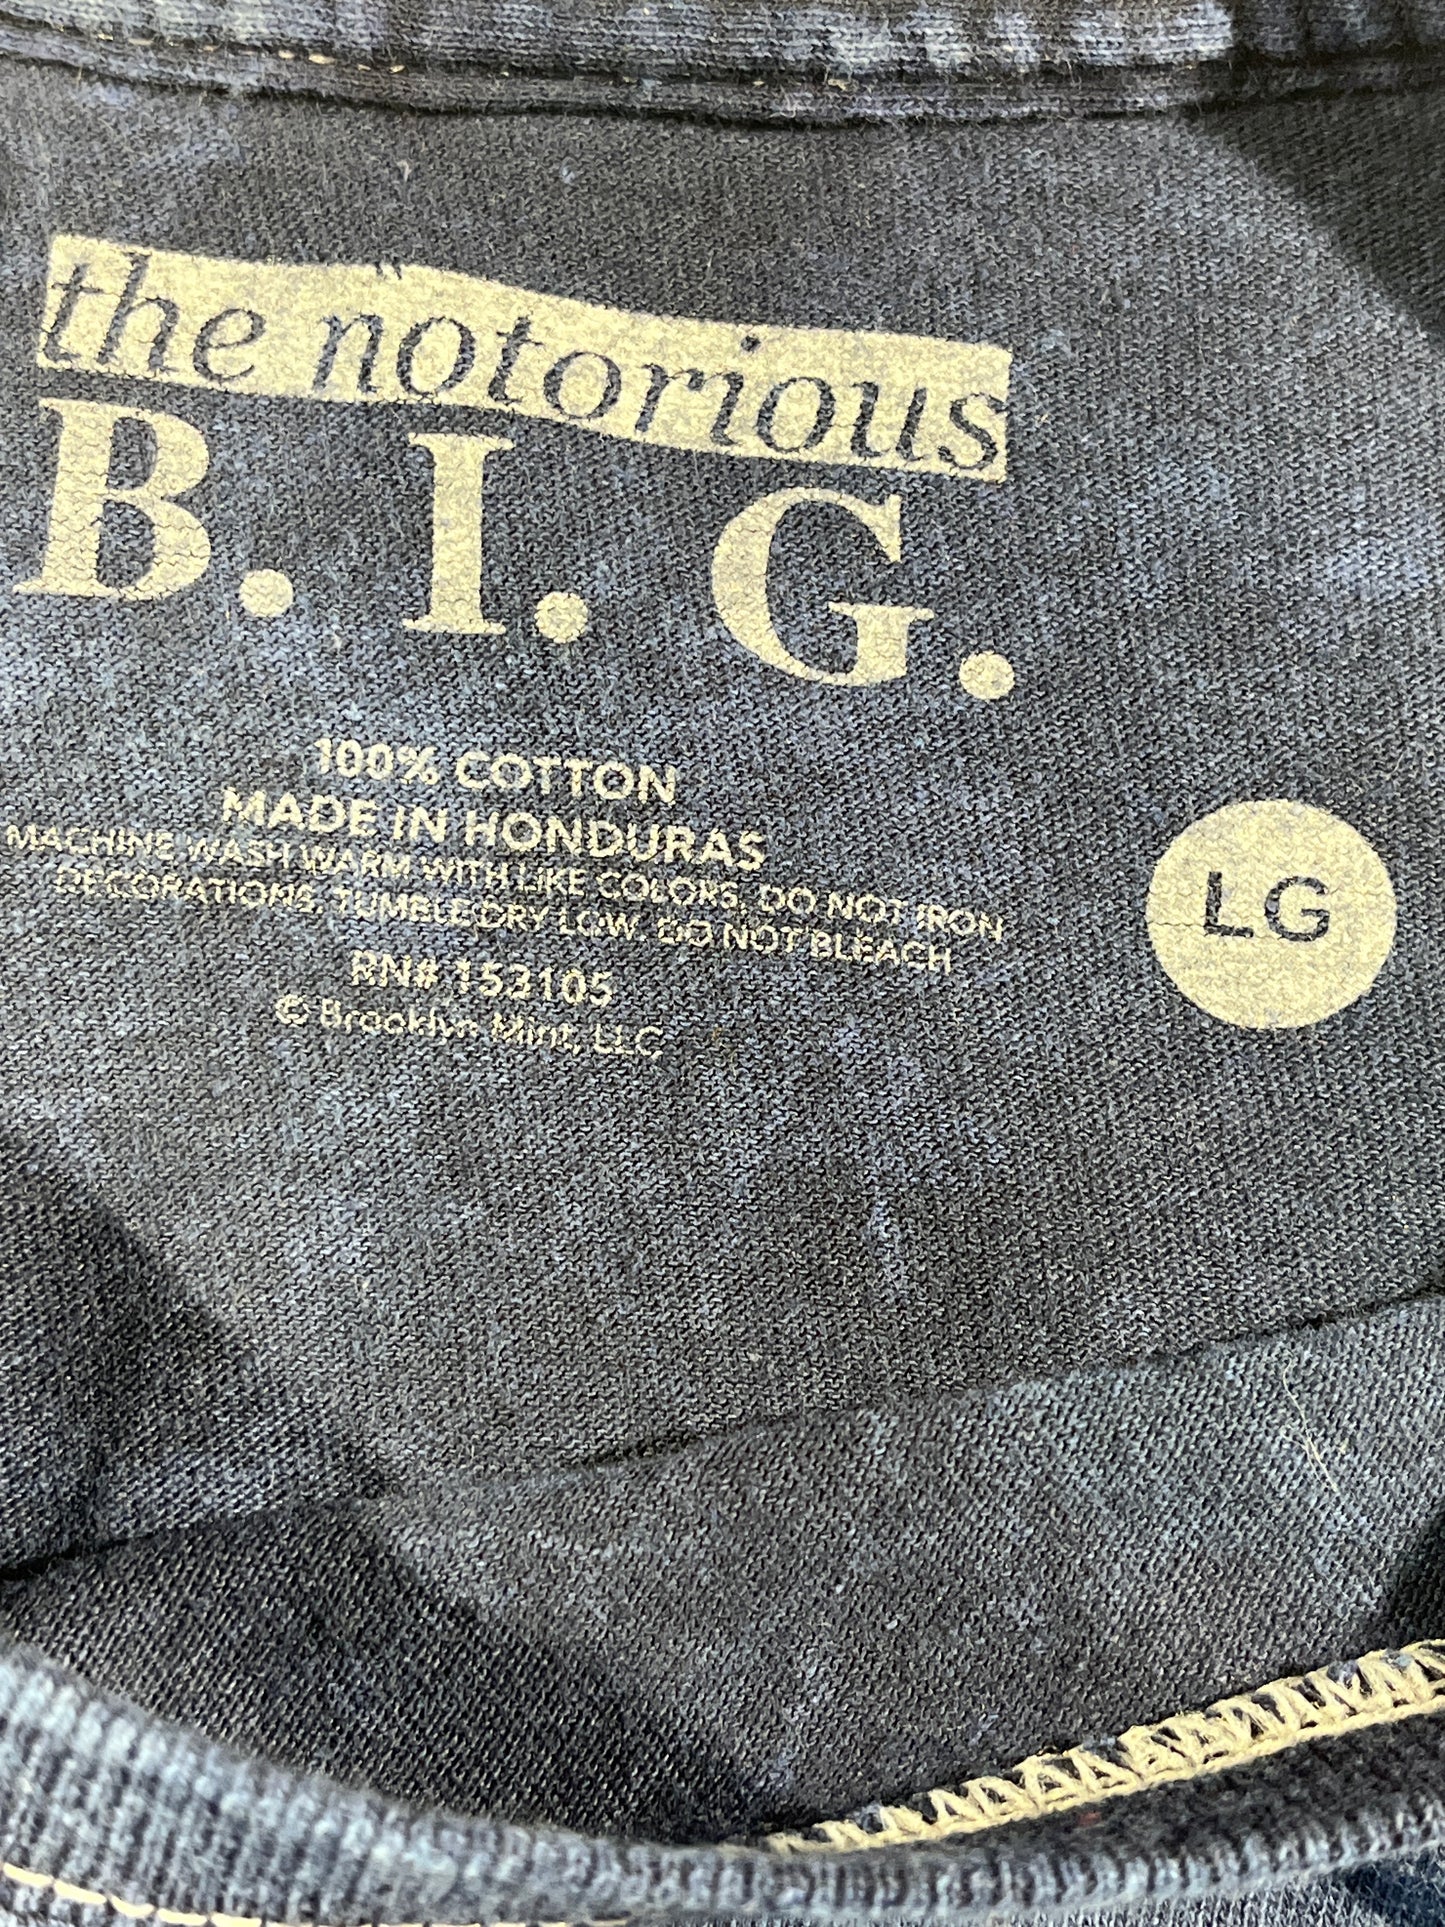 Vintage Biggie Smalls T-Shirt Rap Tee Notorious B.I.G.